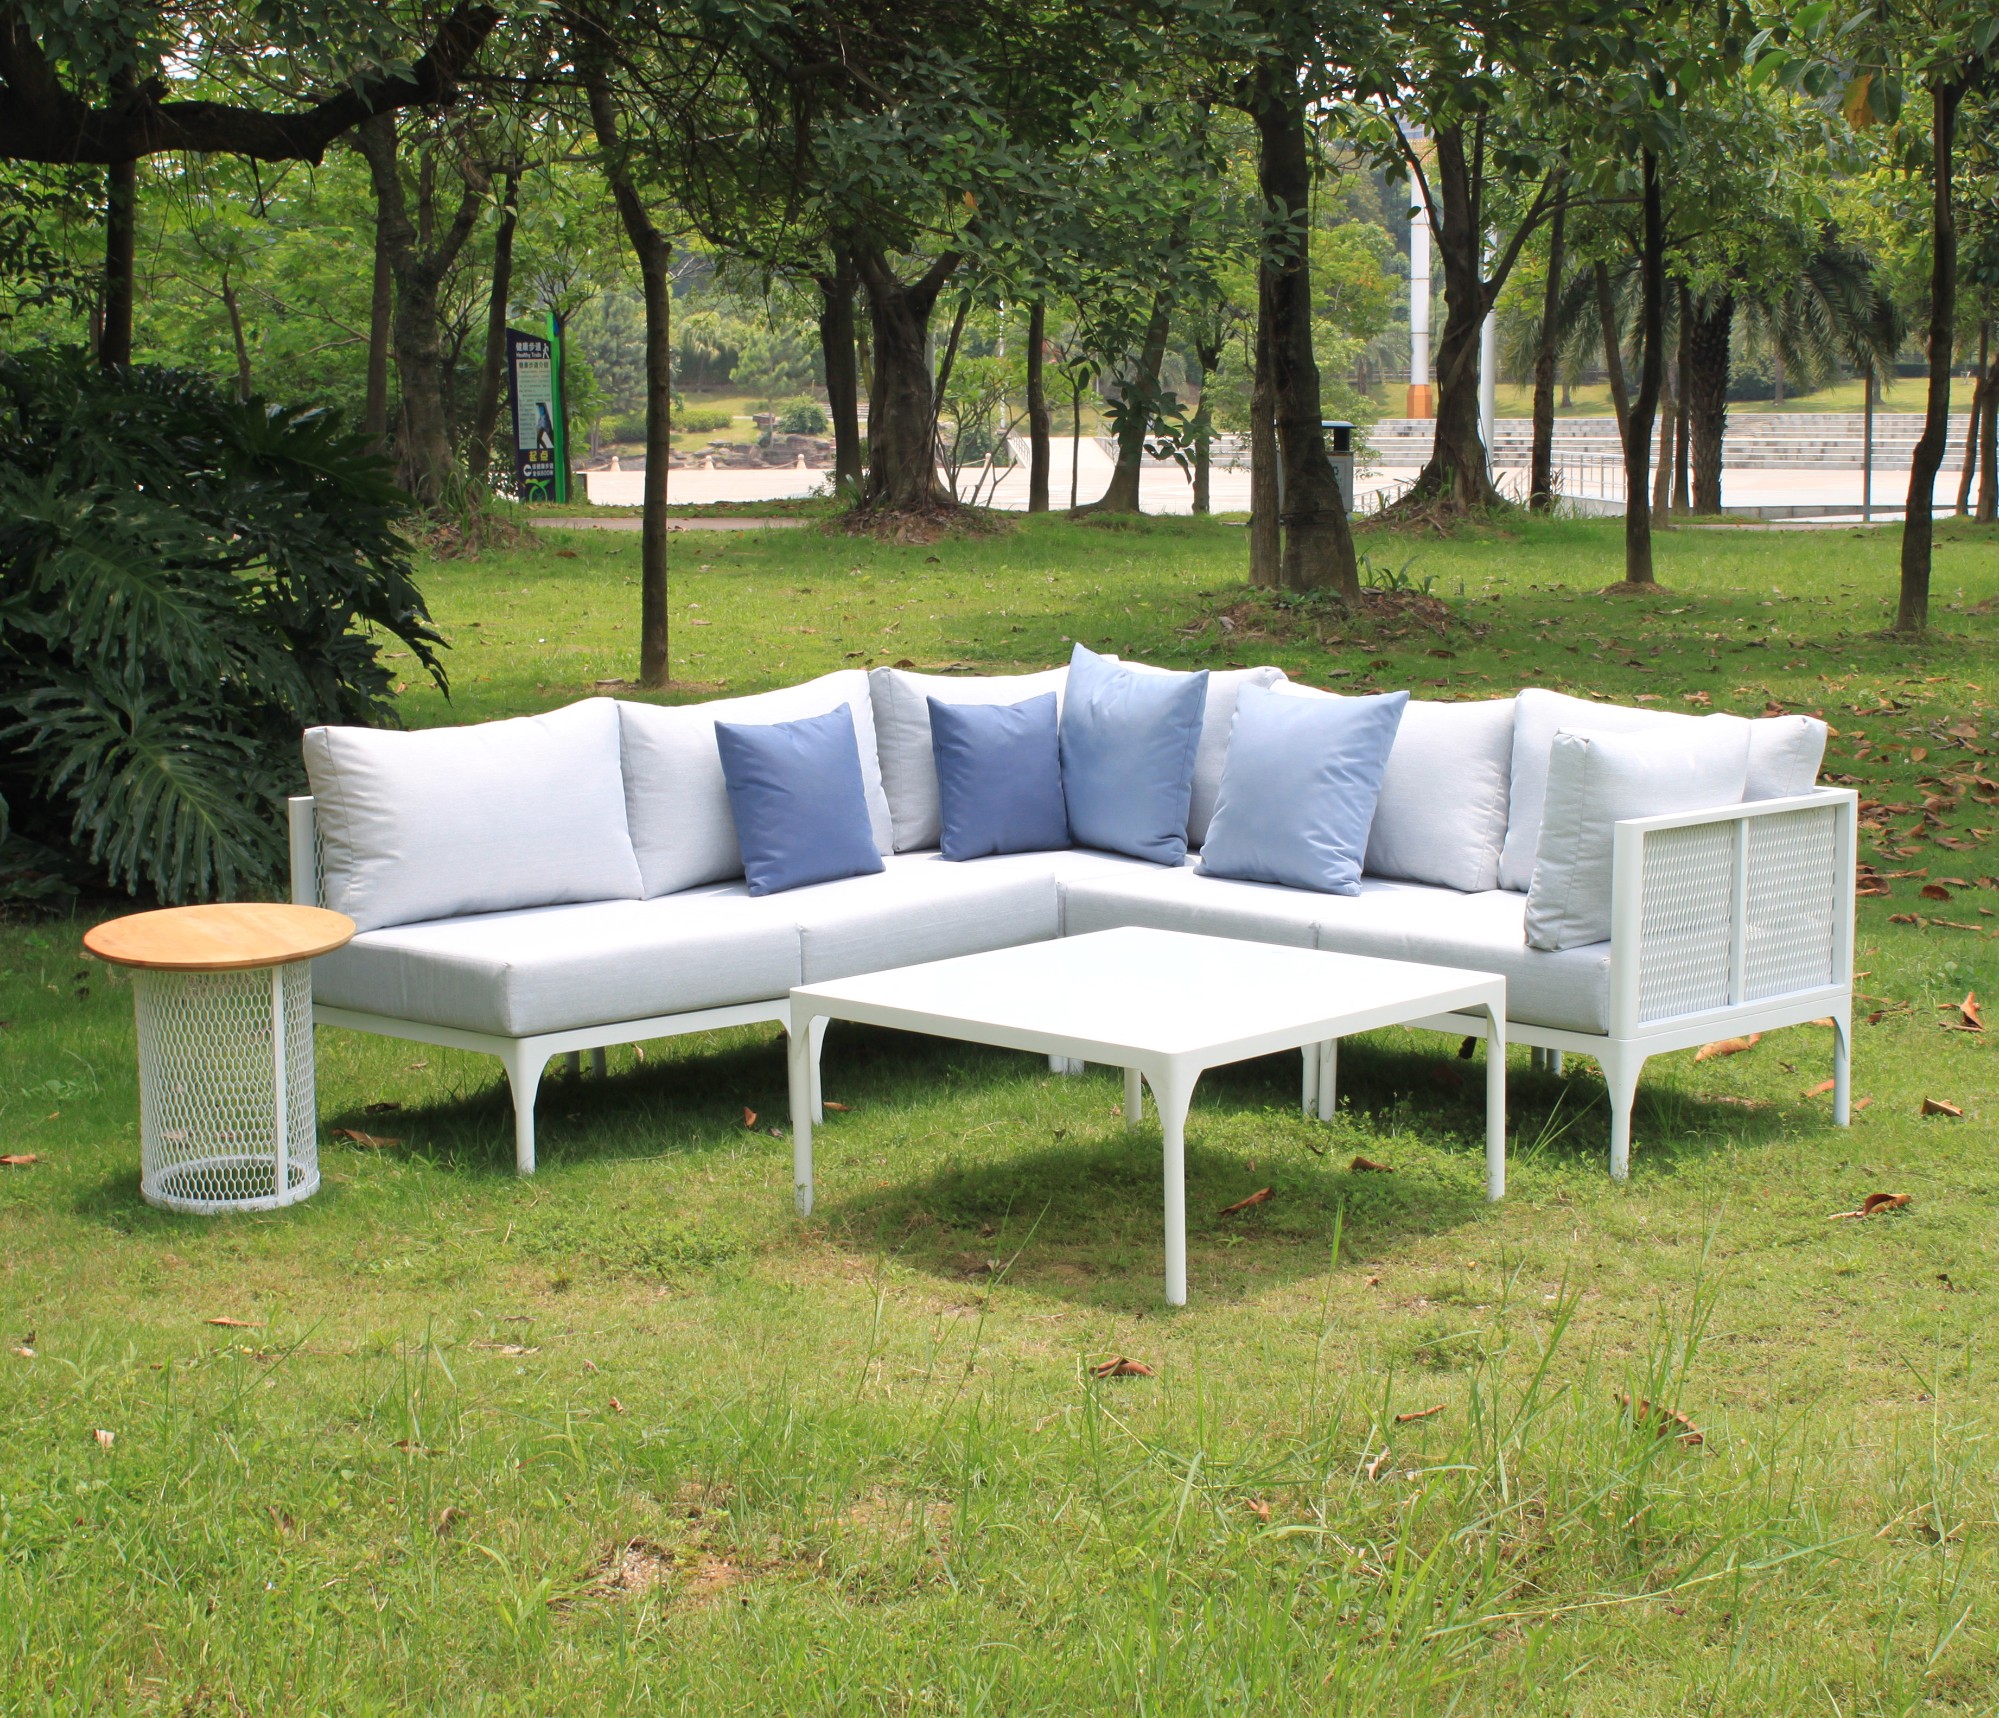 aluminium garden sofa outdoor furniture Manufacturers, aluminium garden sofa outdoor furniture Factory, Supply aluminium garden sofa outdoor furniture